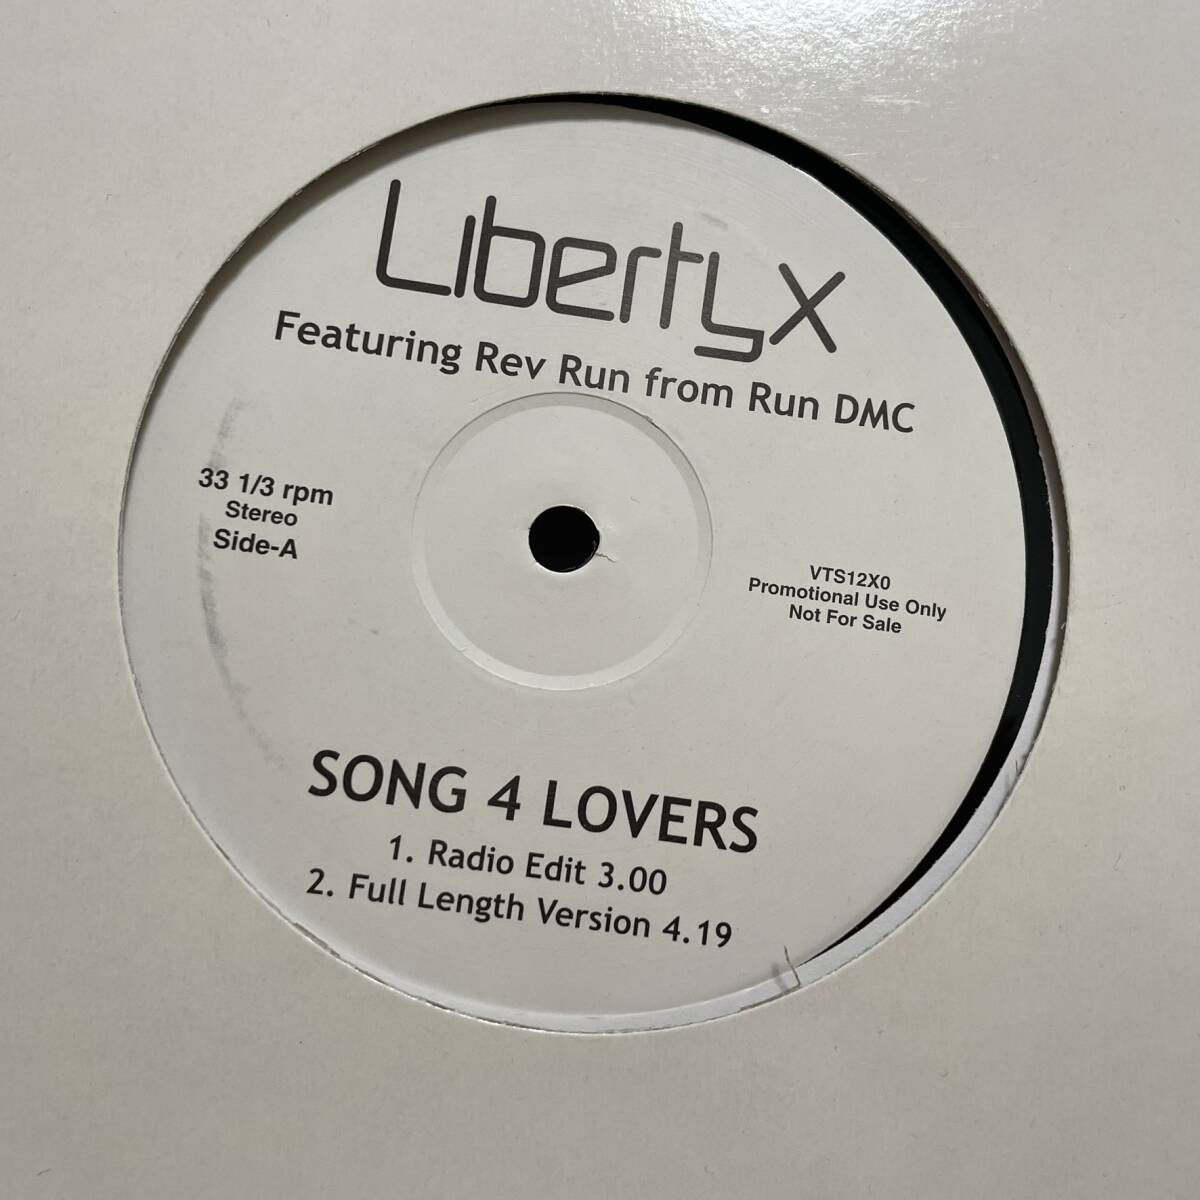 Liberty X Featuring Rev Run (Run DMC) / SONG 4 LOVERS / 12インチ アナログレコード / 送料込_画像1